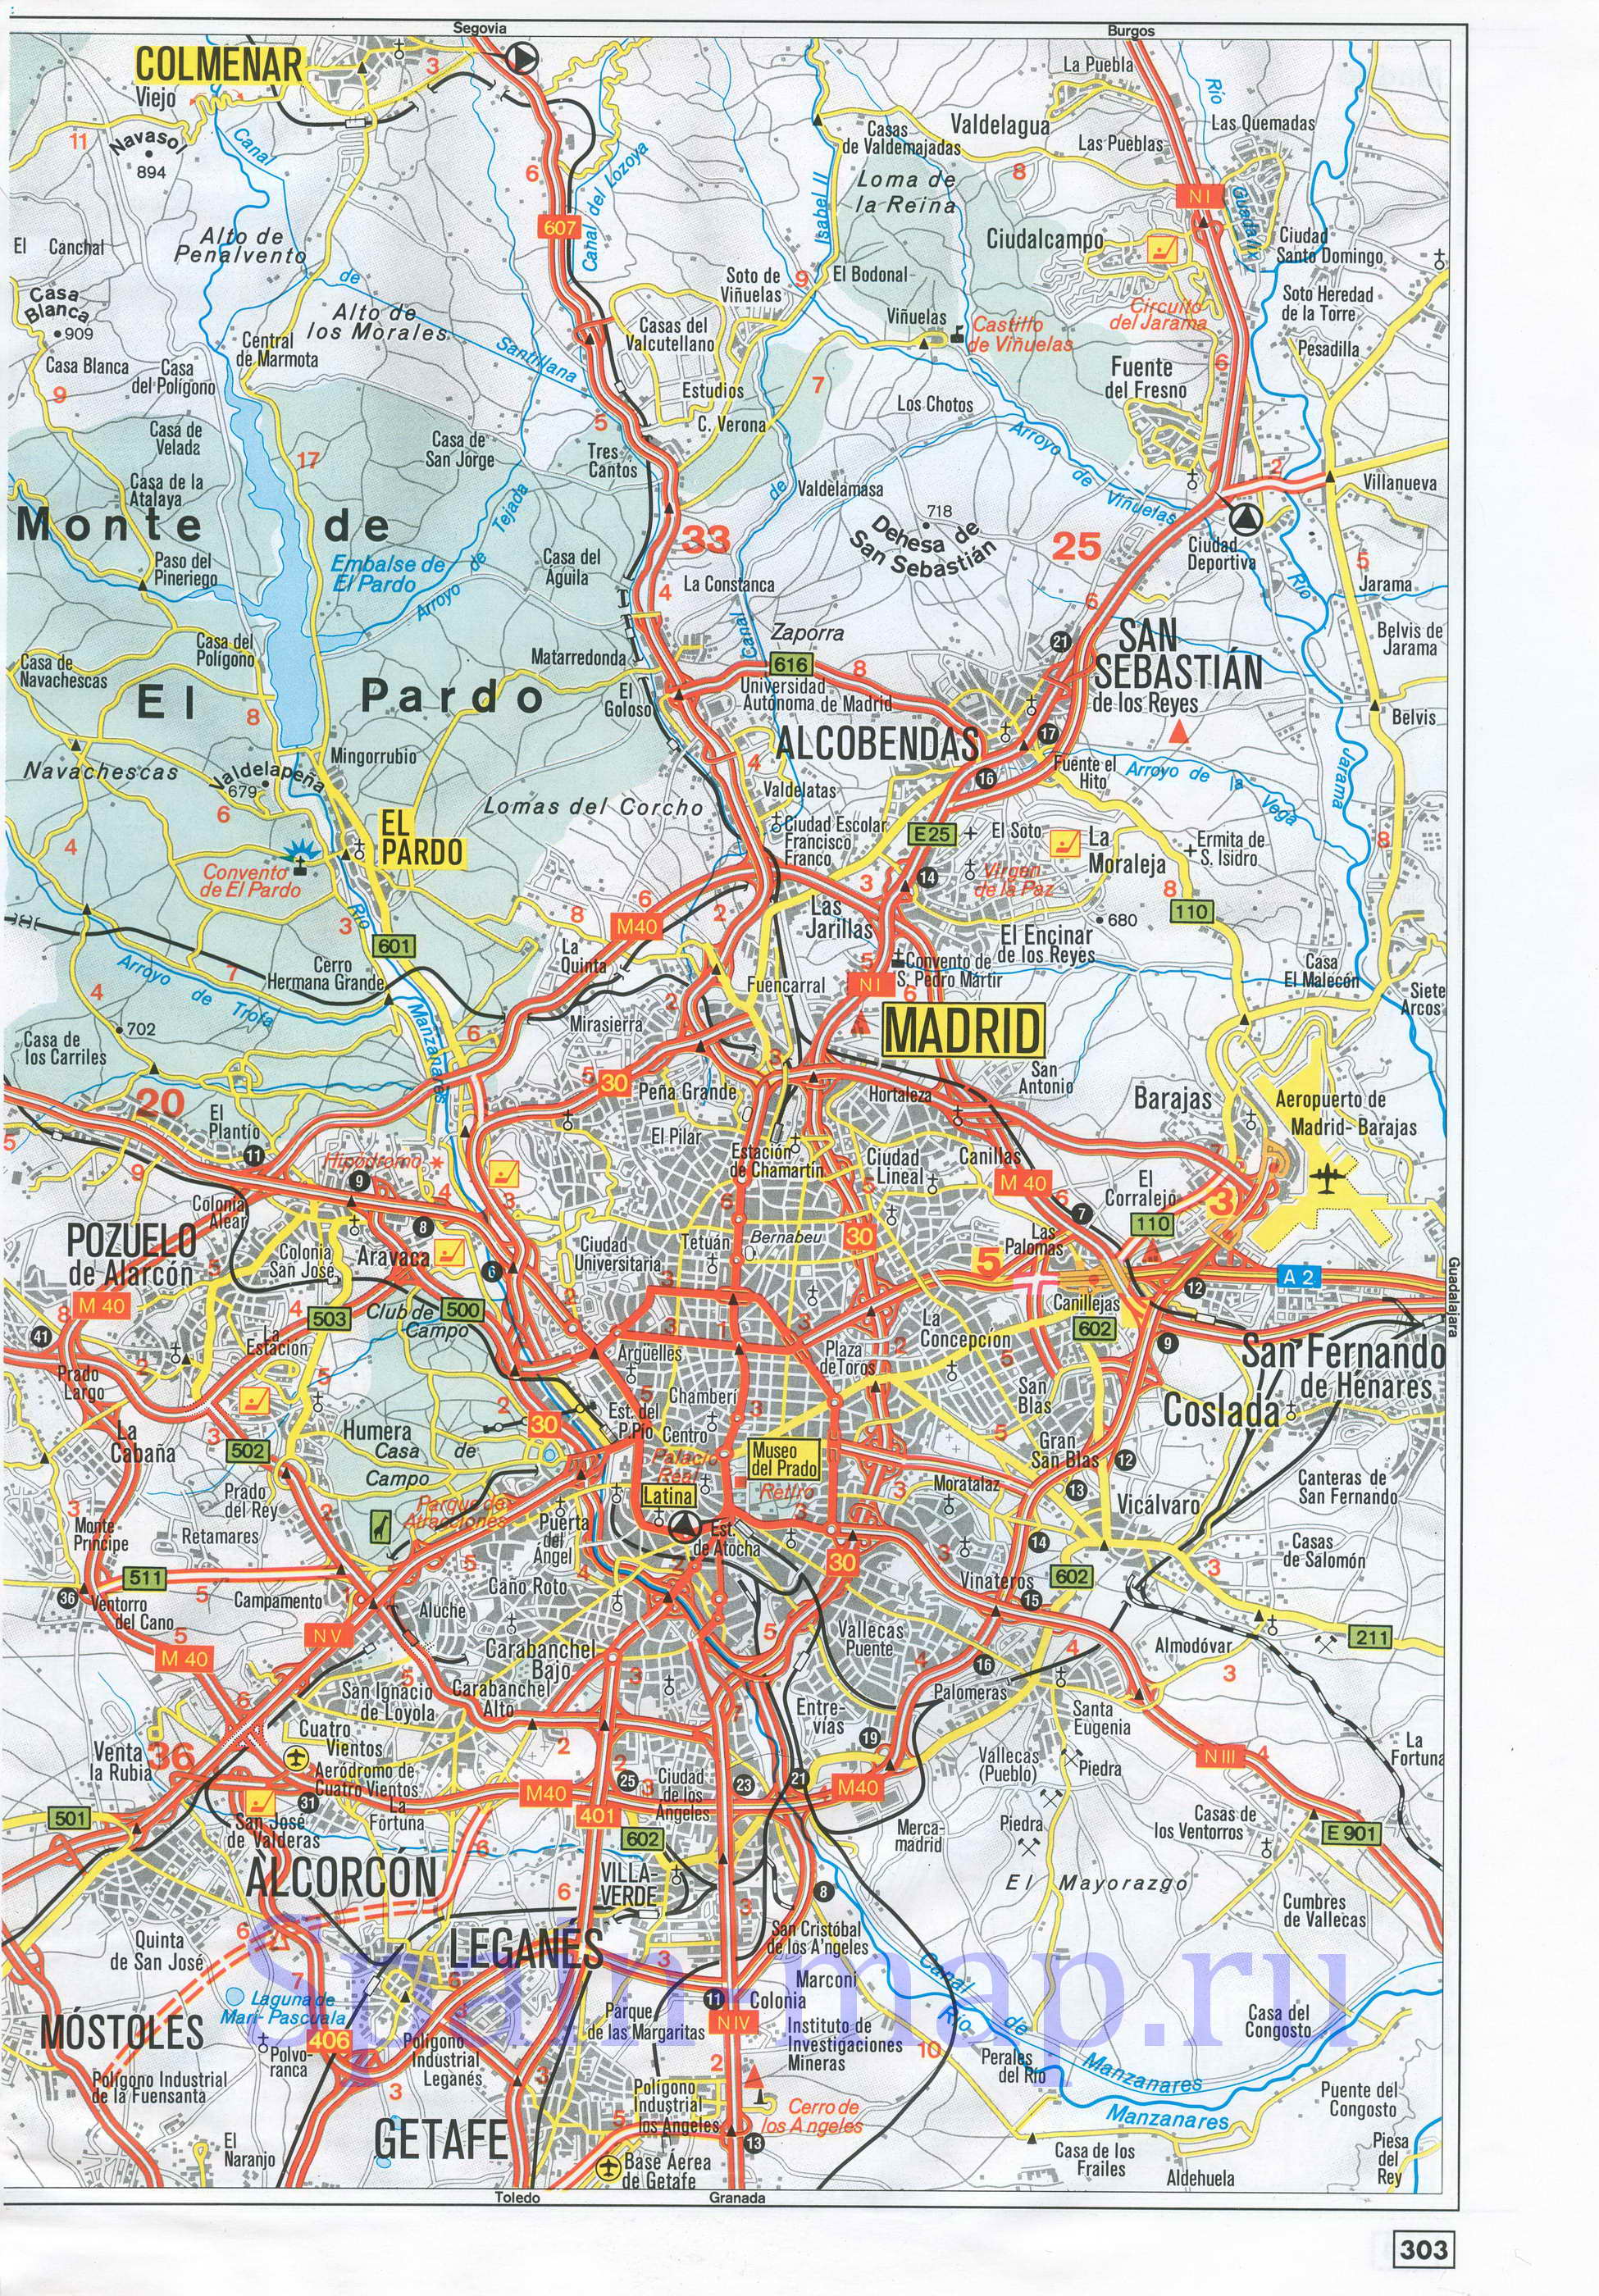 Карта Мадрида автомобильная. Подробная автомобильная карта окрестностей Мадрида, B0 - 